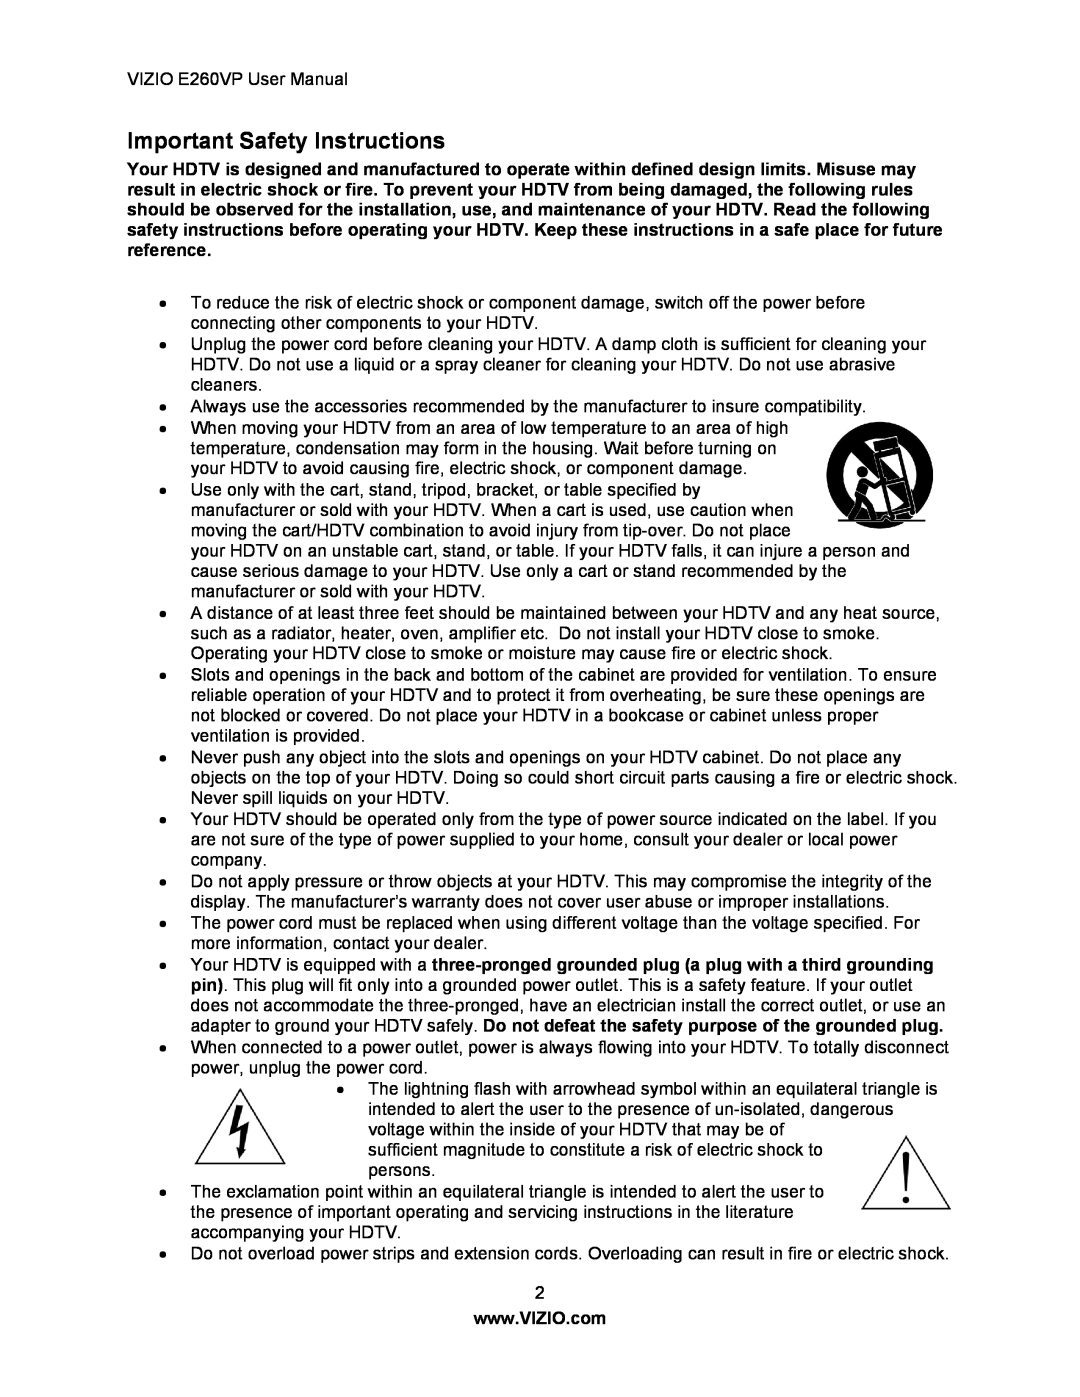 Vizio E260VP user manual Important Safety Instructions 